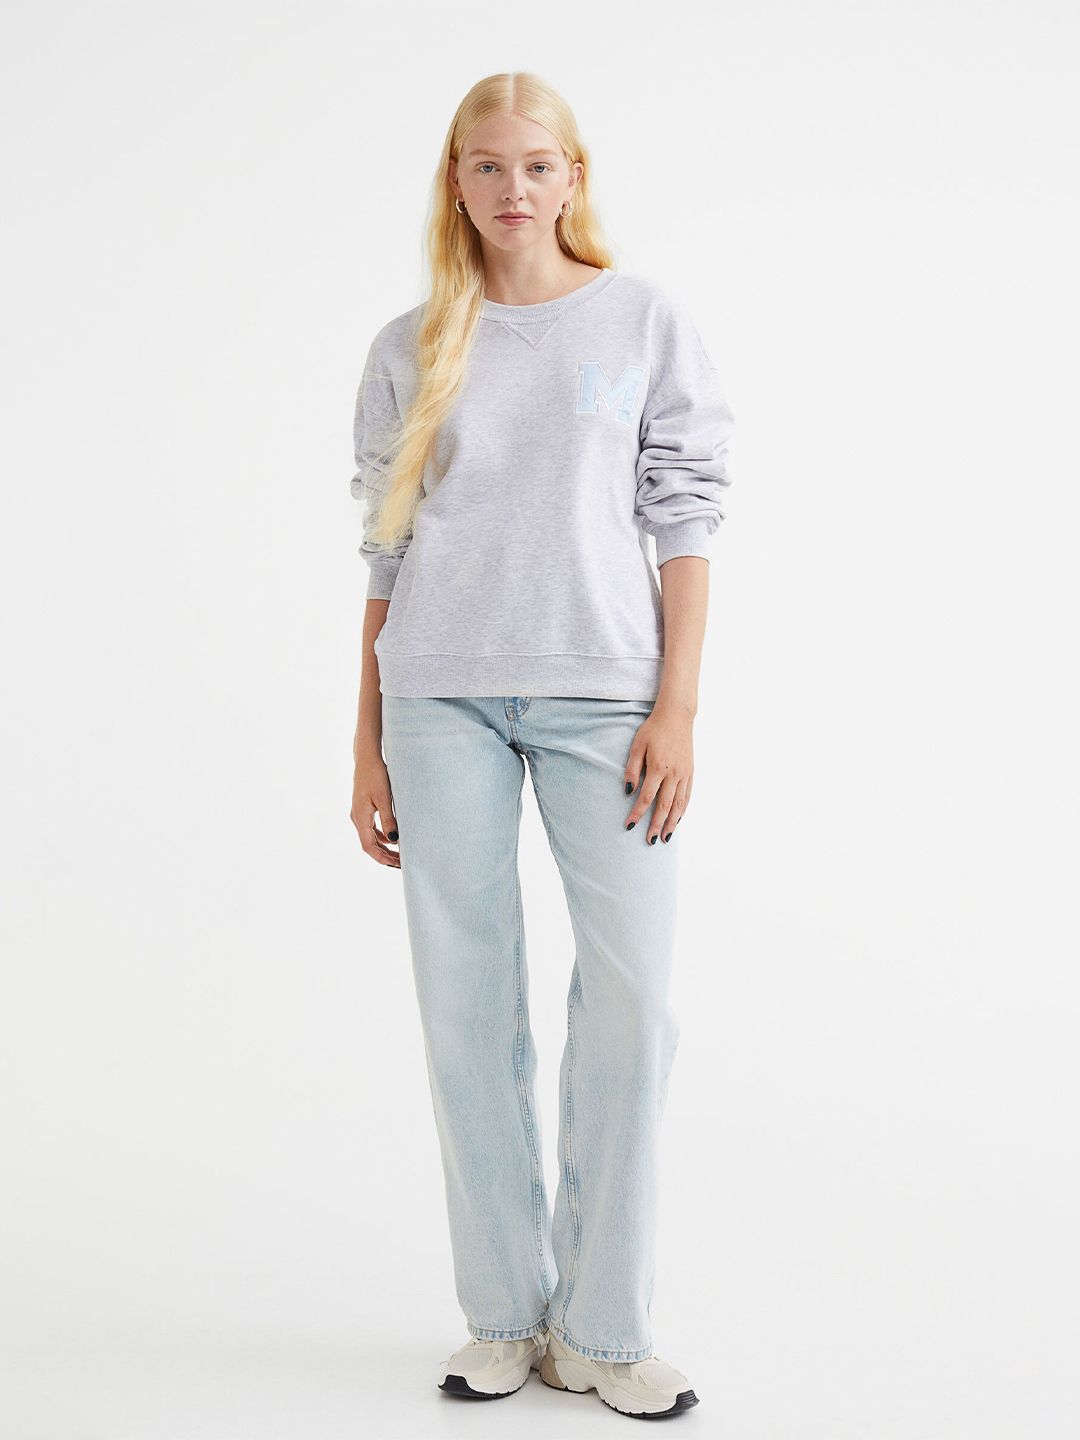 H&M Women Grey Sweatshirt Price in India